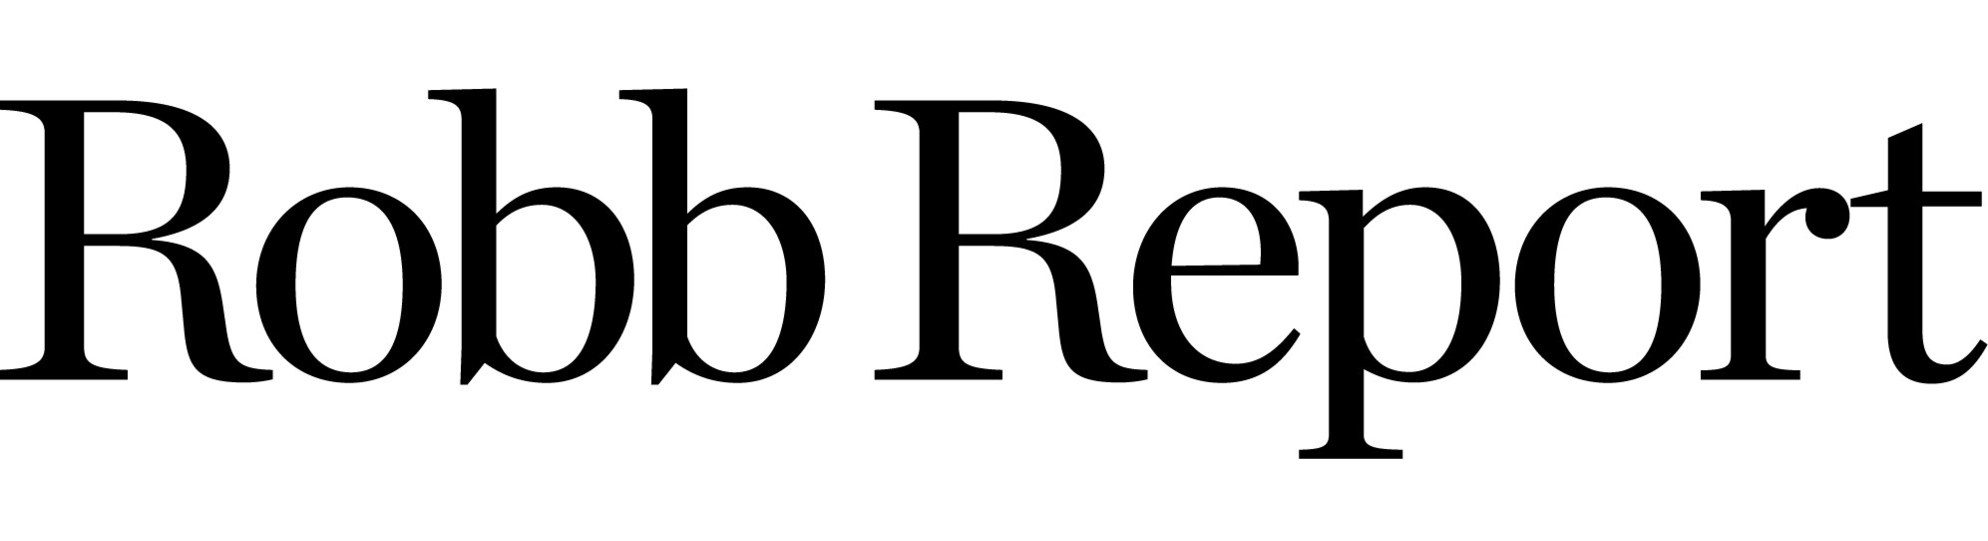 Robb Report Logo Photographer.jpg